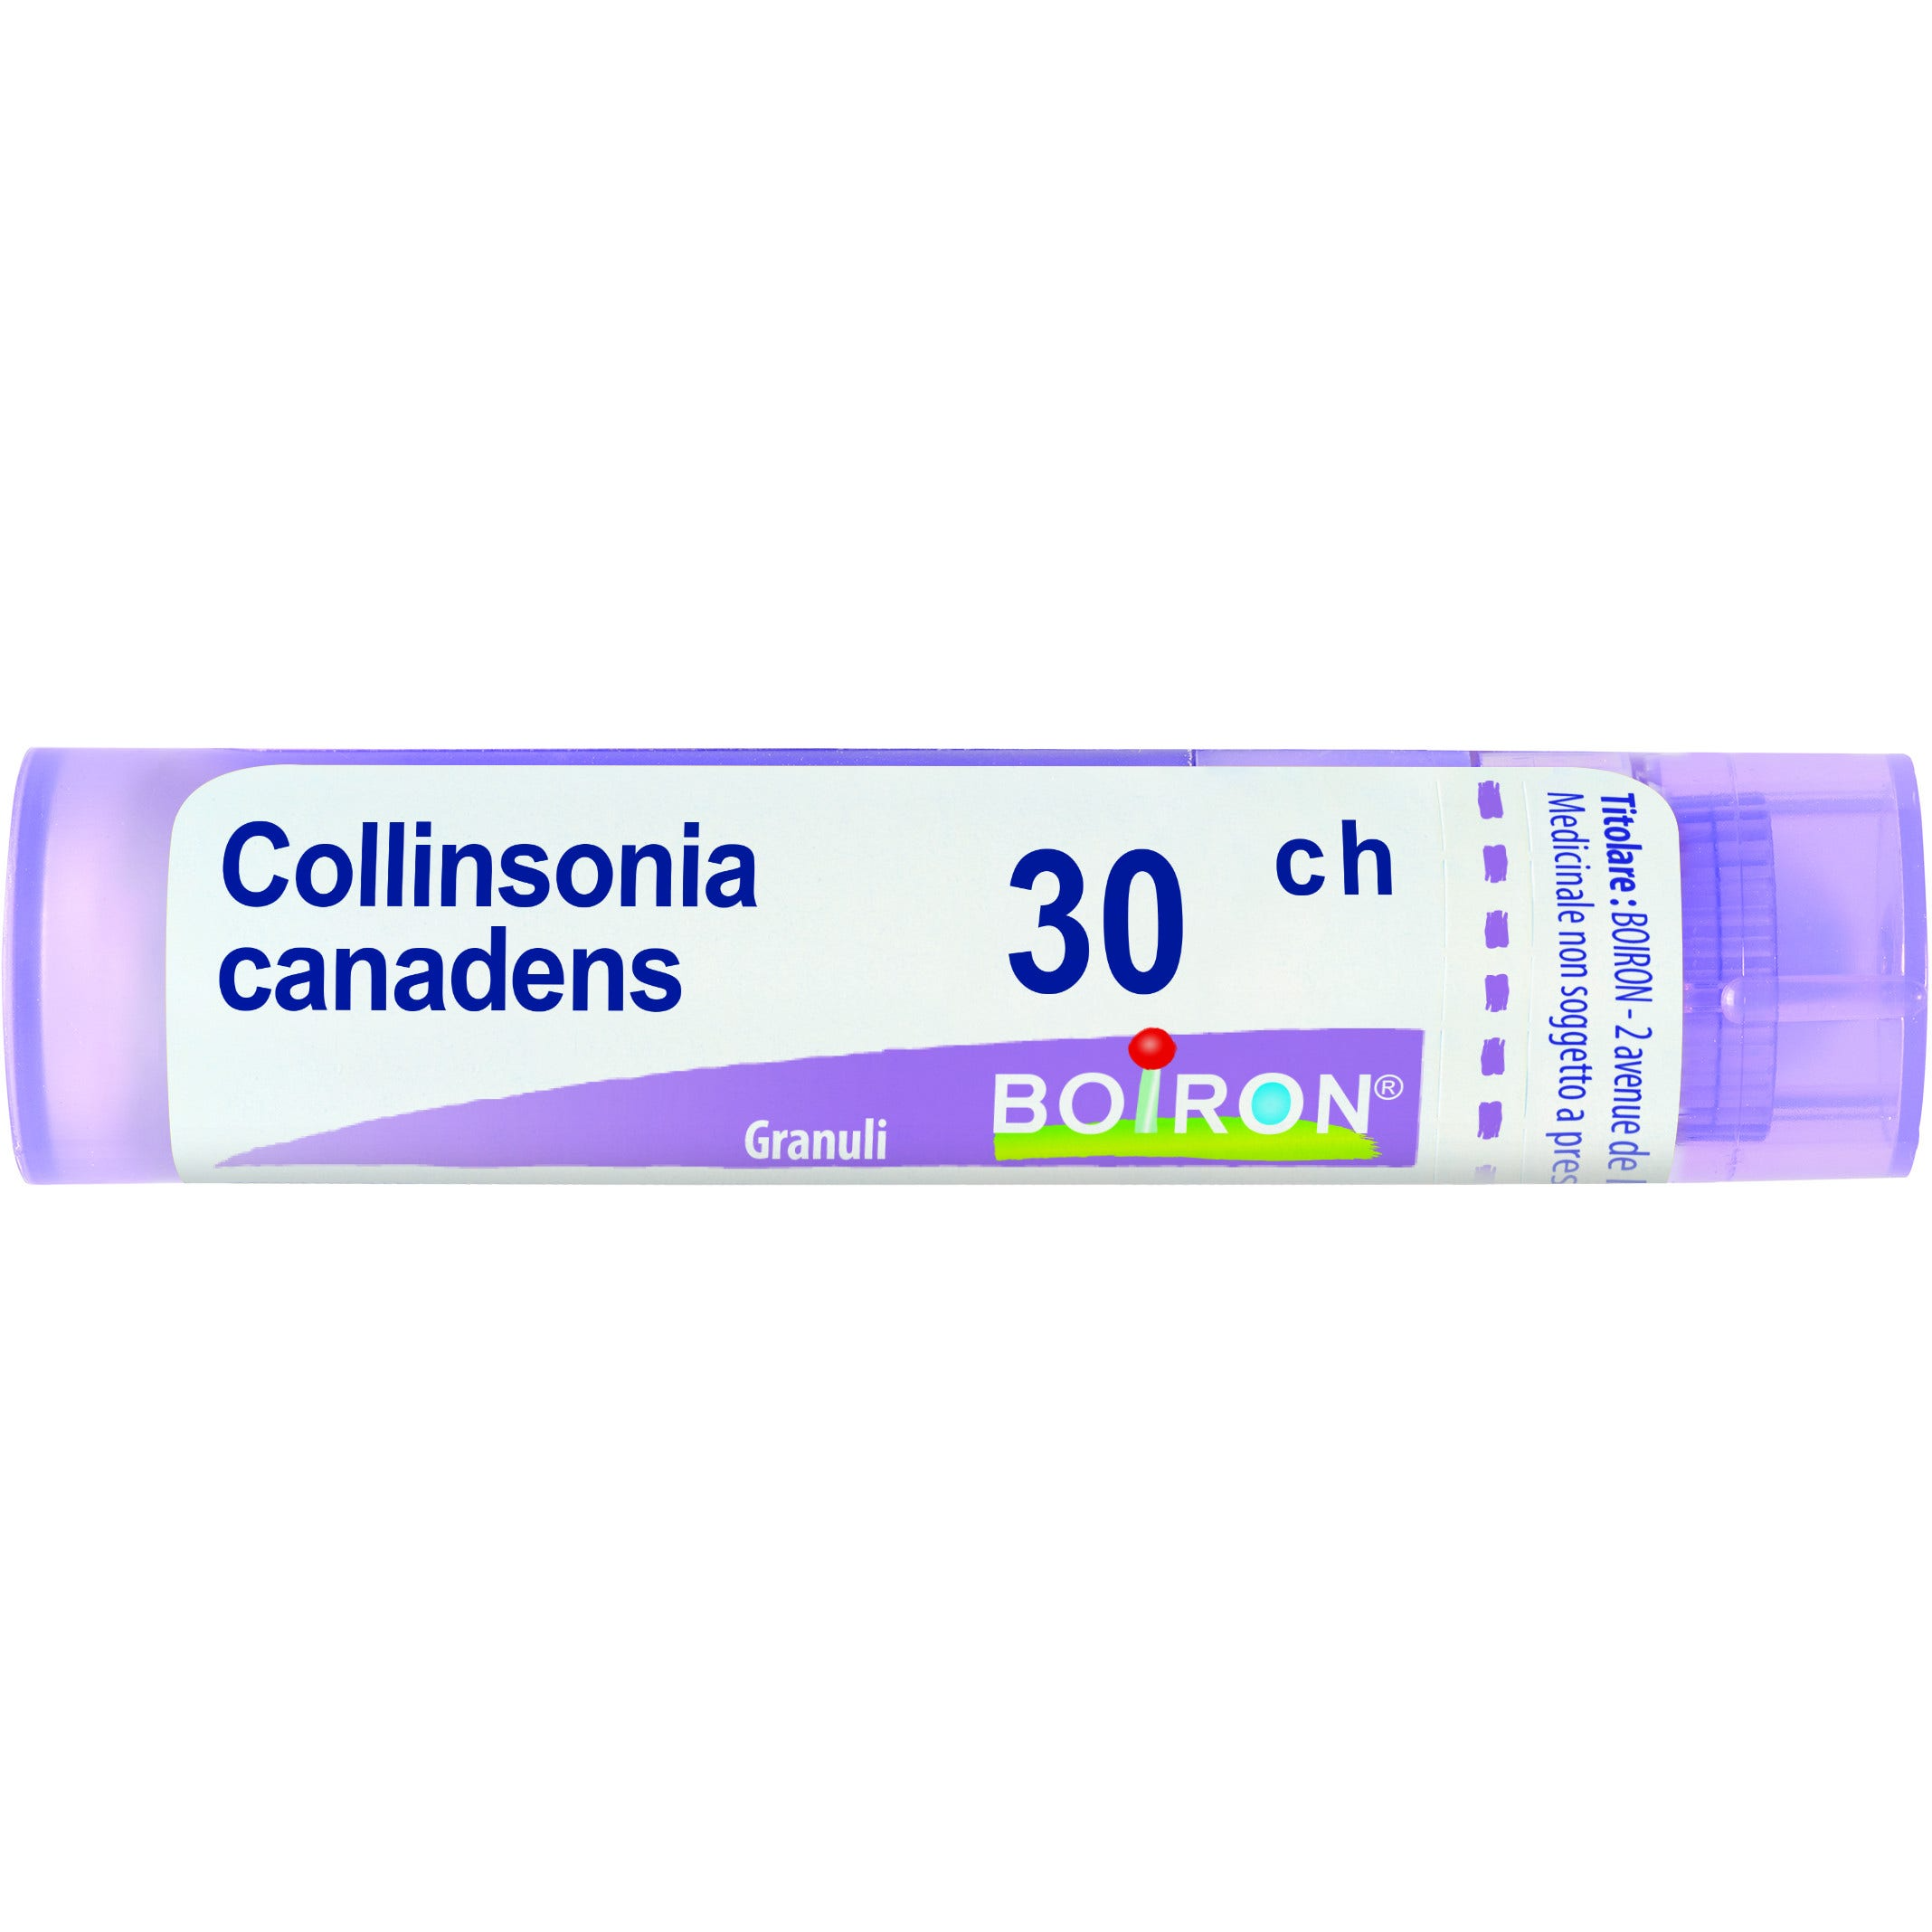 Collinsonia Canadens 30CH Boiron 80 Granuli